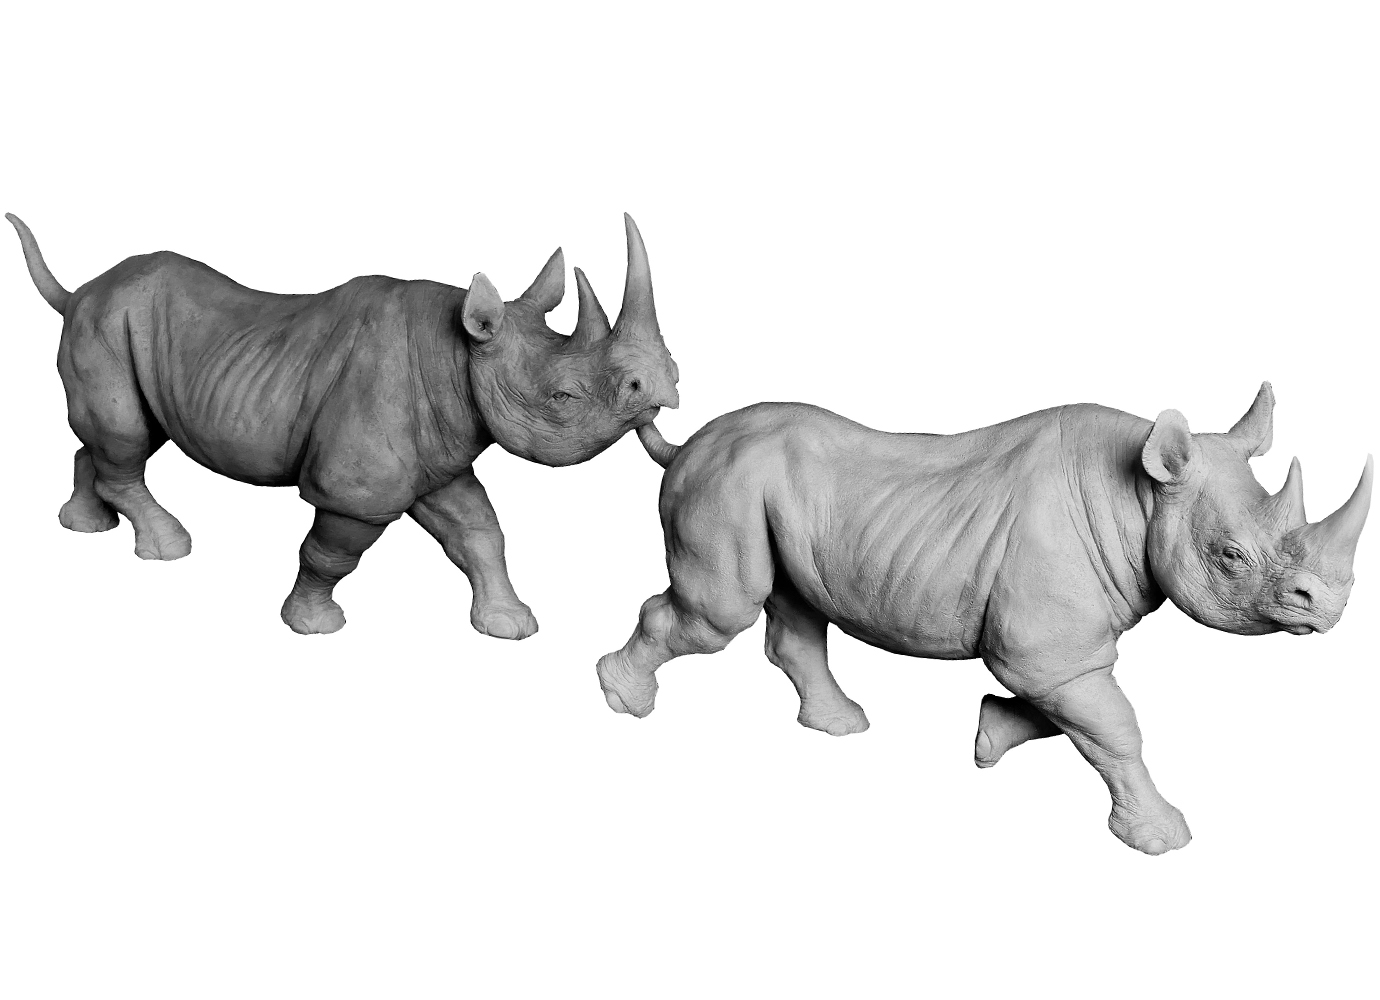 Bronze sculpture Colcombet rhinocéros noir